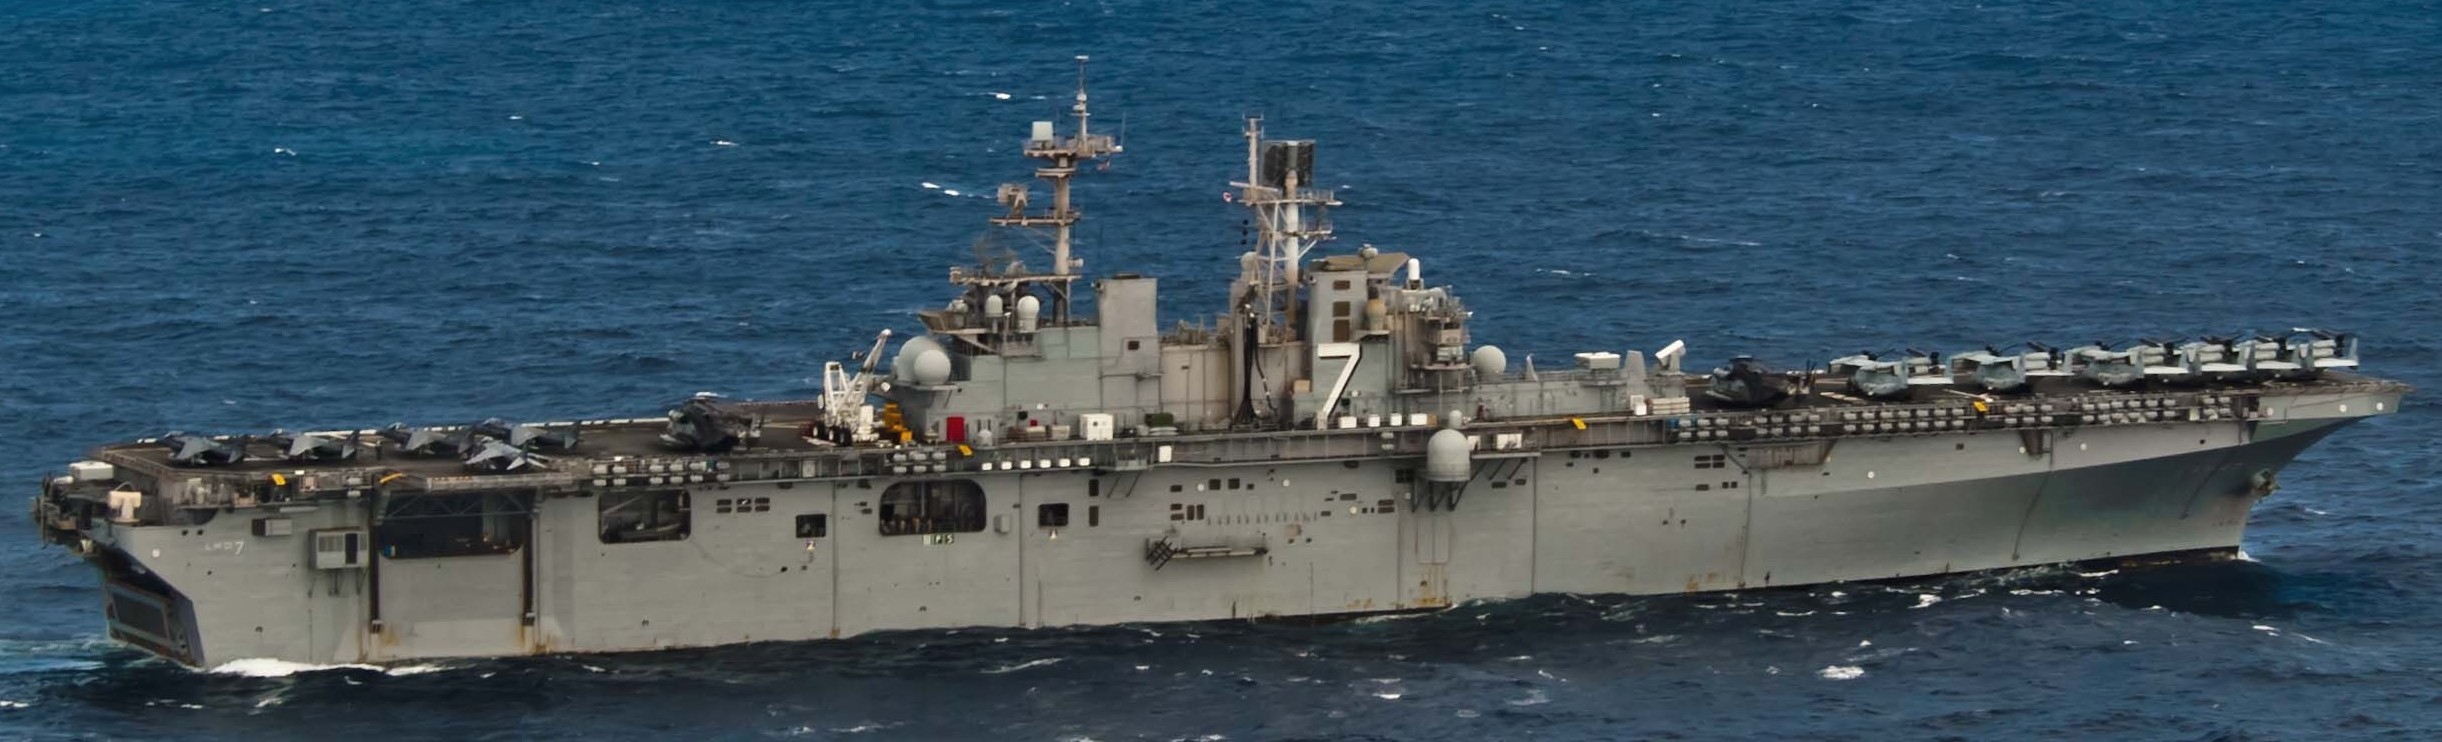 lhd-7 uss iwo jima wasp class amphibious assault ship dock landing helicopter us navy vmm-261 marines 104